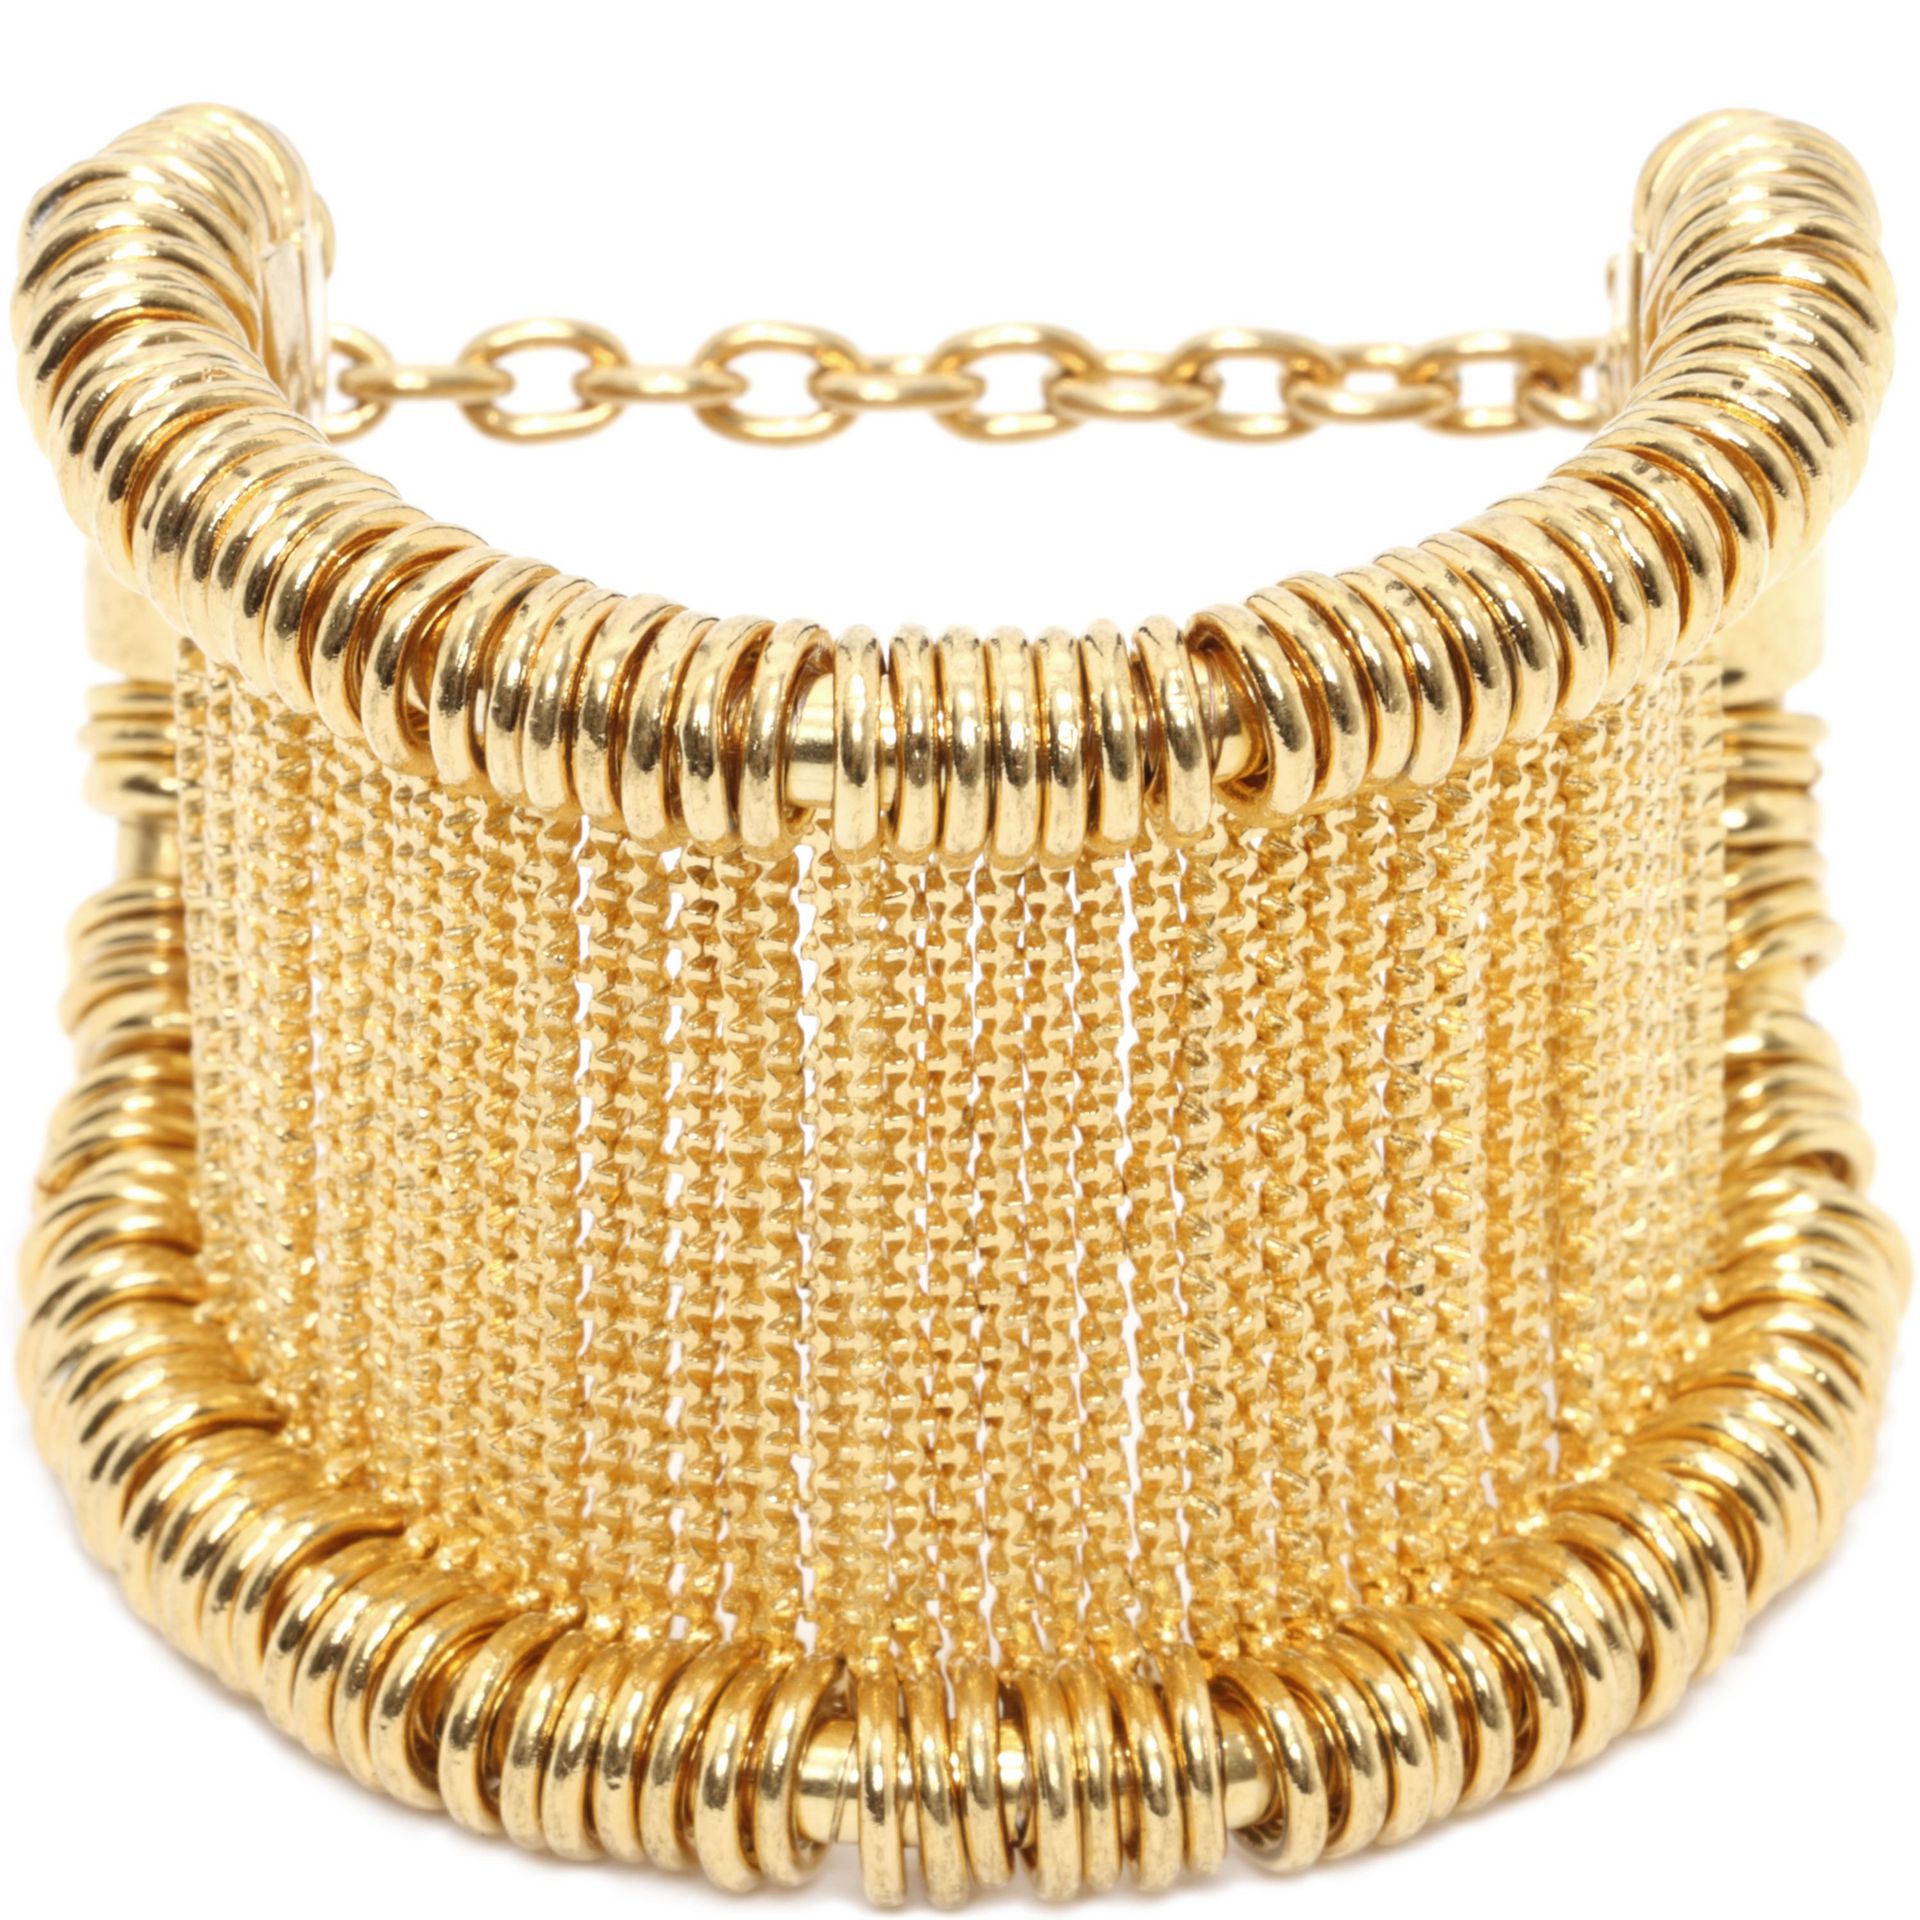 Show Cuff Alexander McQueen | Bracelet | Jewelry